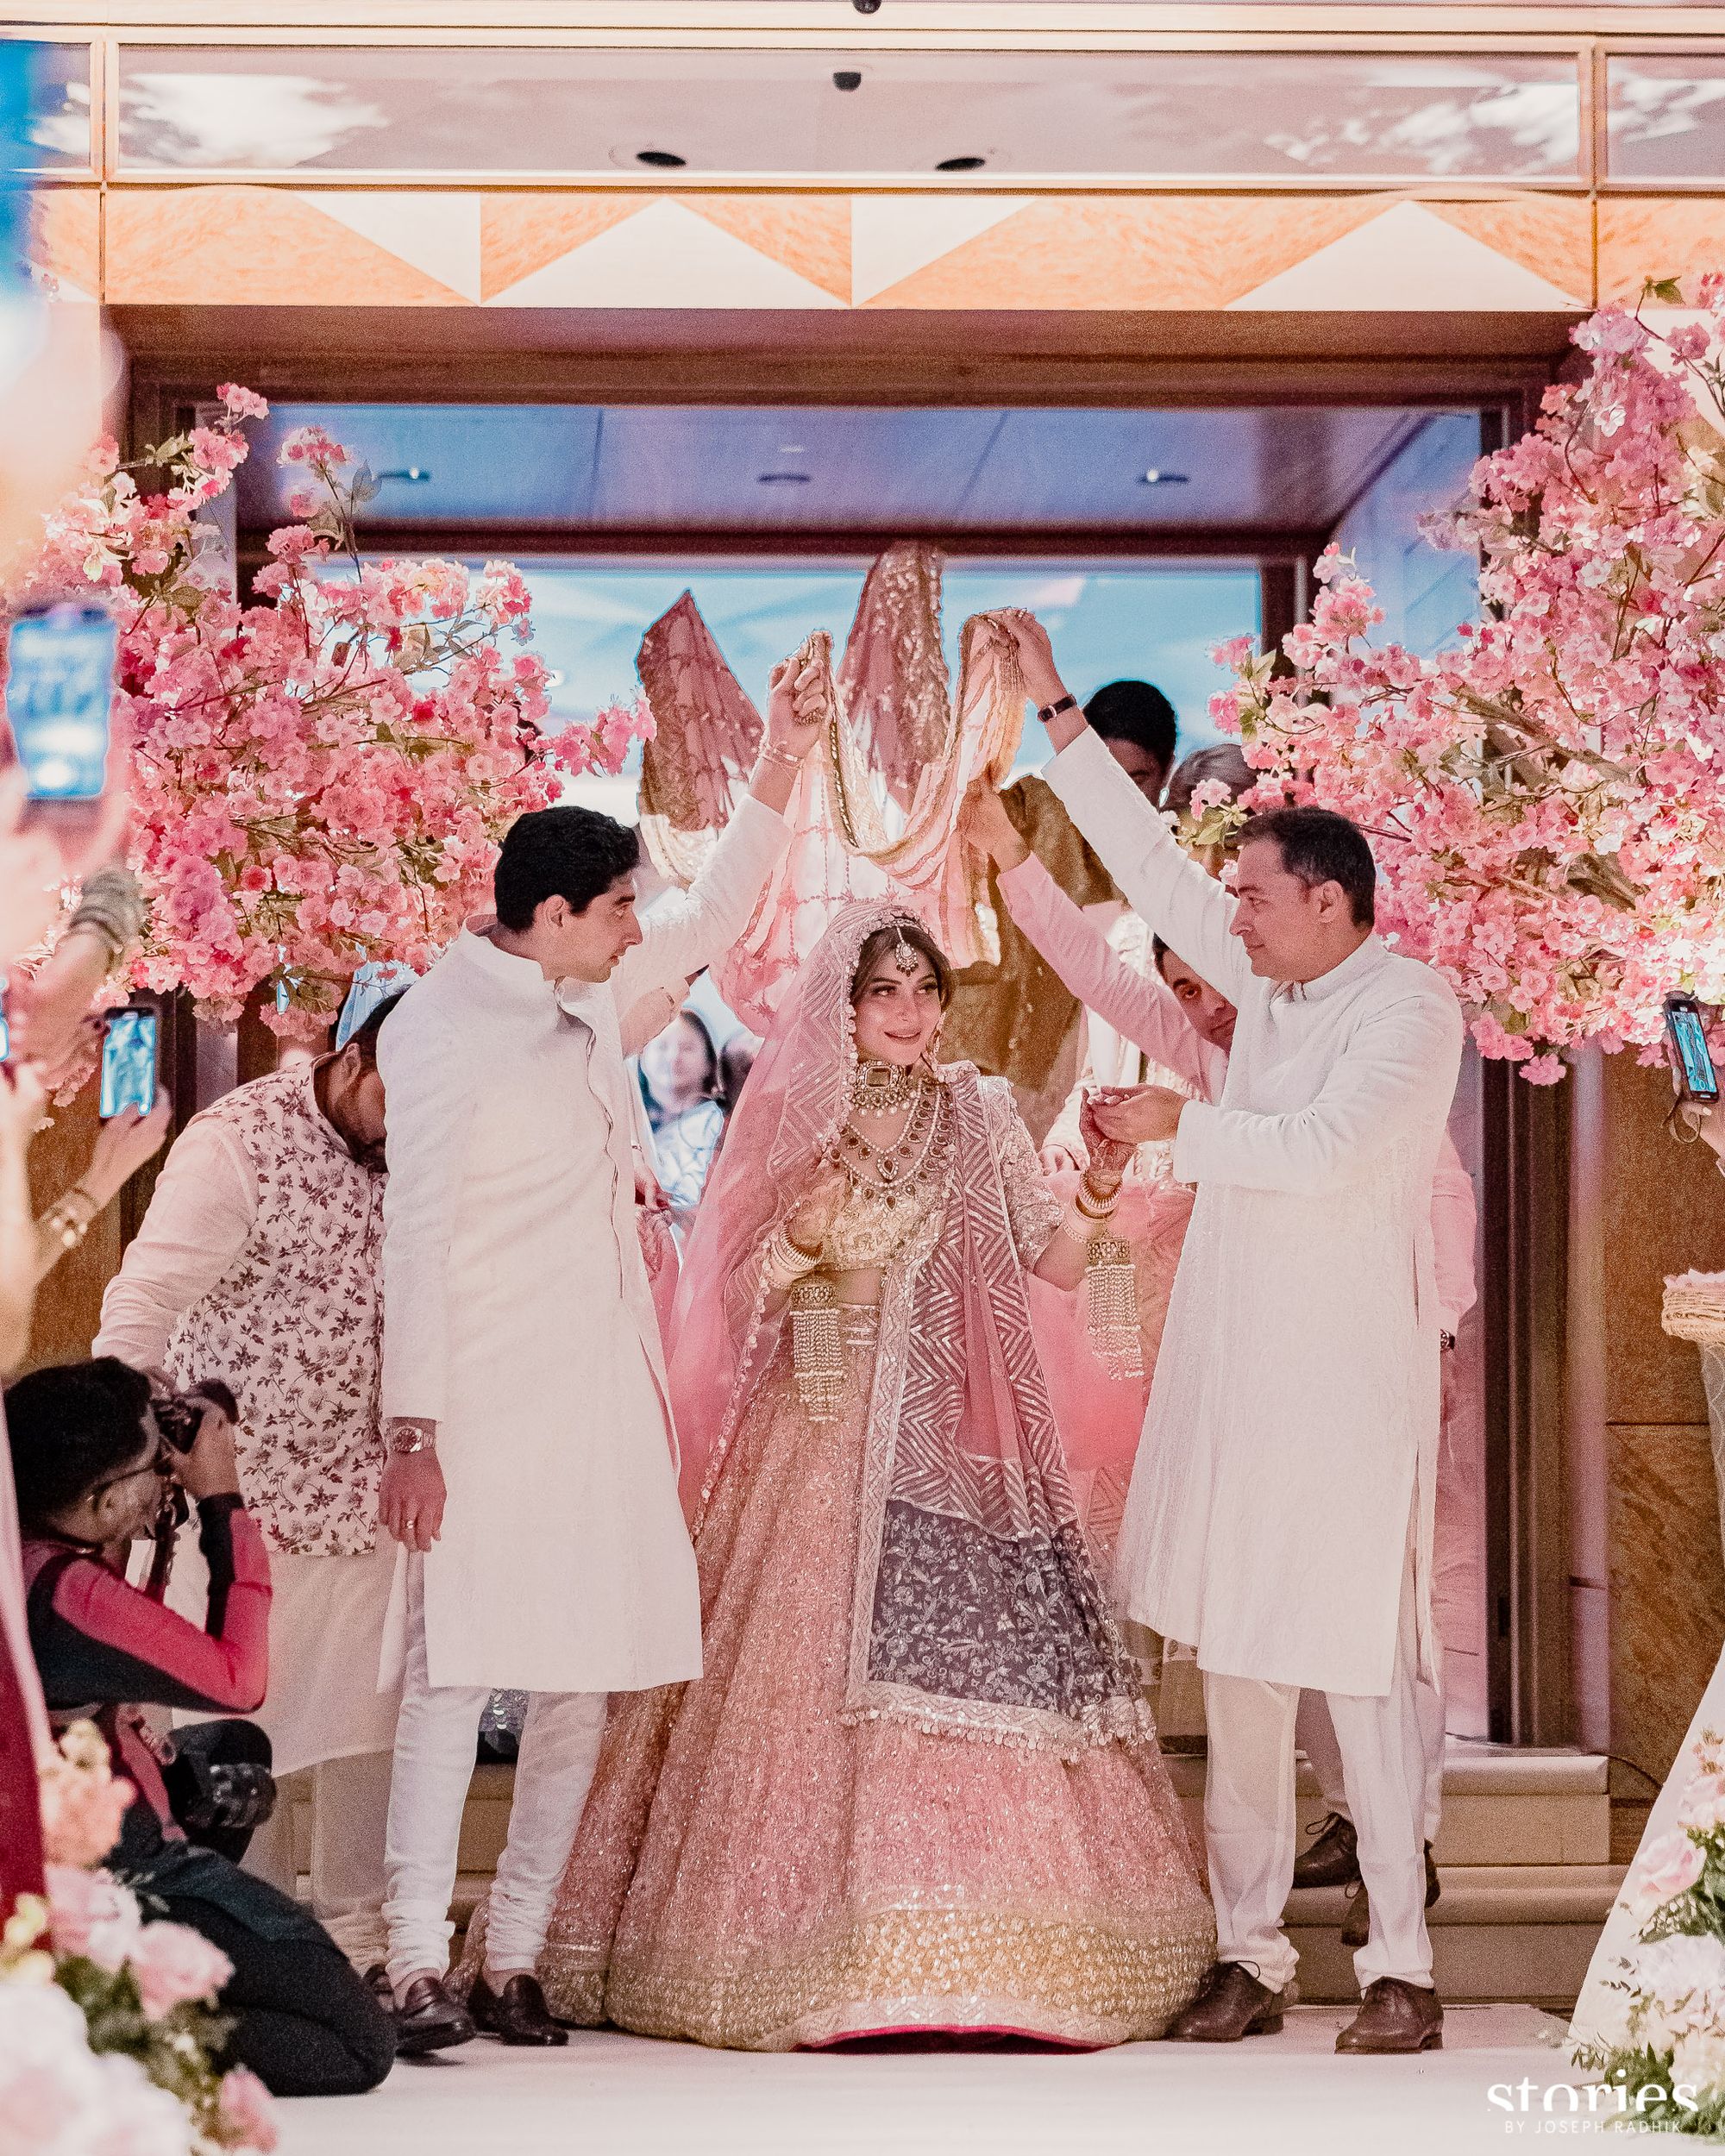 Photos: Kanika Kapoor Marries Beau Gautam Hathiramani In A Dreamy Ceremony In London